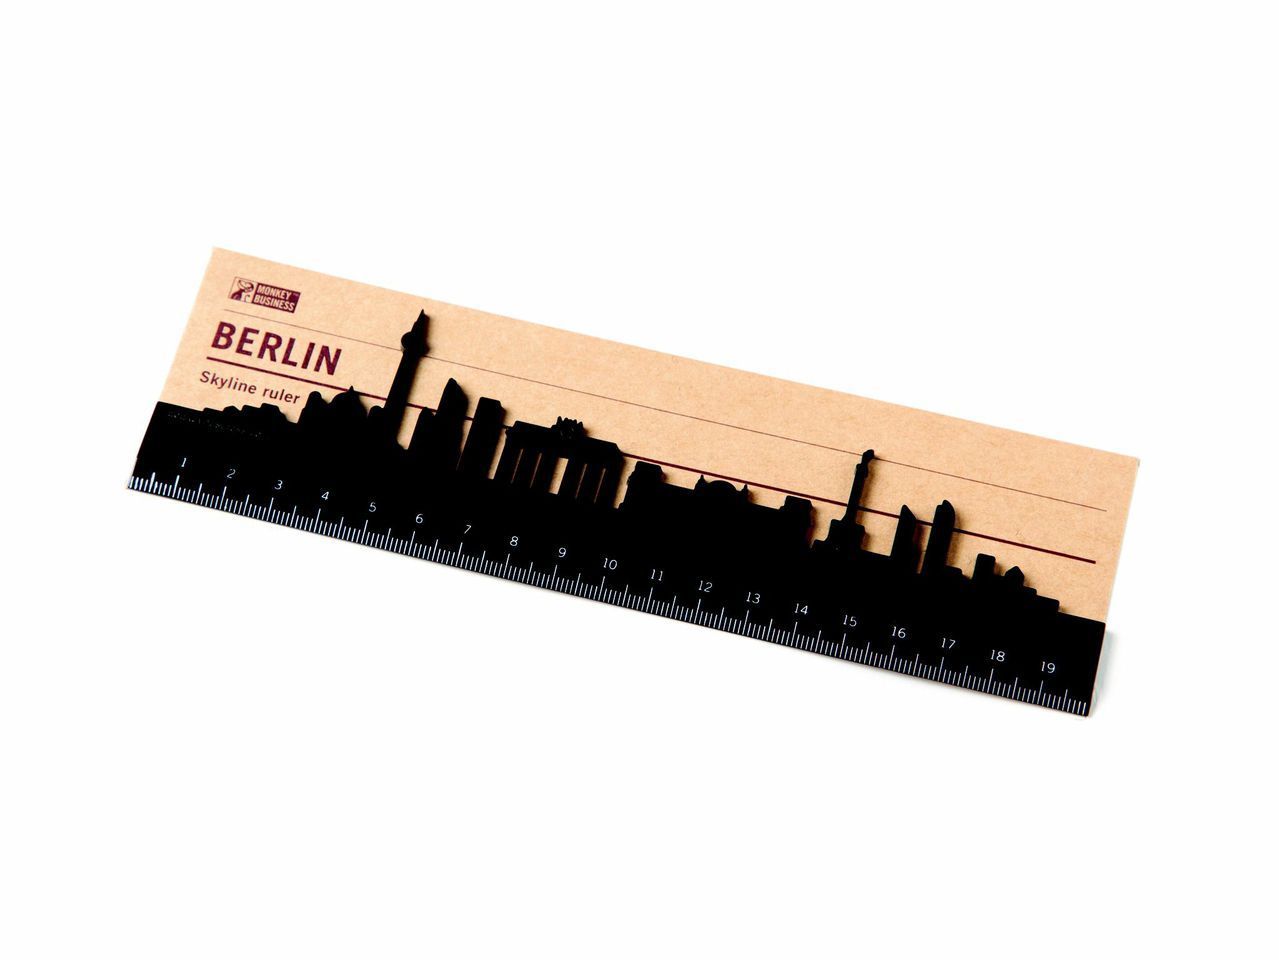 Ruler "Skyline Ruler" Berlin" by Monkey Business